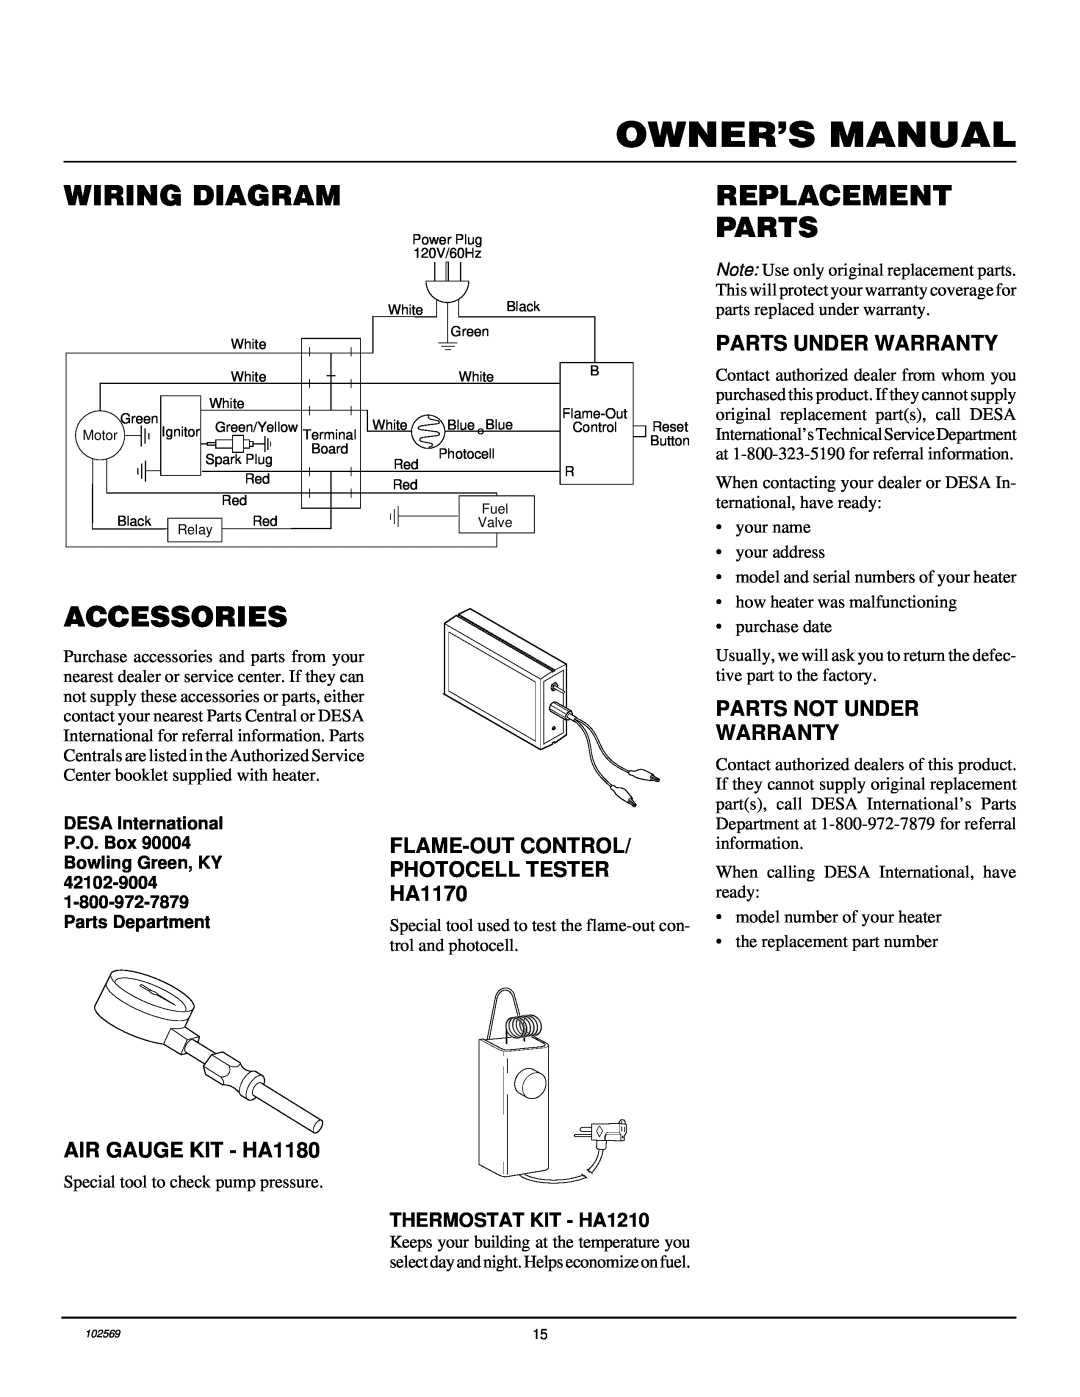 Desa REM200, R200, B200 Wiring Diagram, Accessories, Replacement Parts, Parts Under Warranty, AIR GAUGE KIT - HA1180 